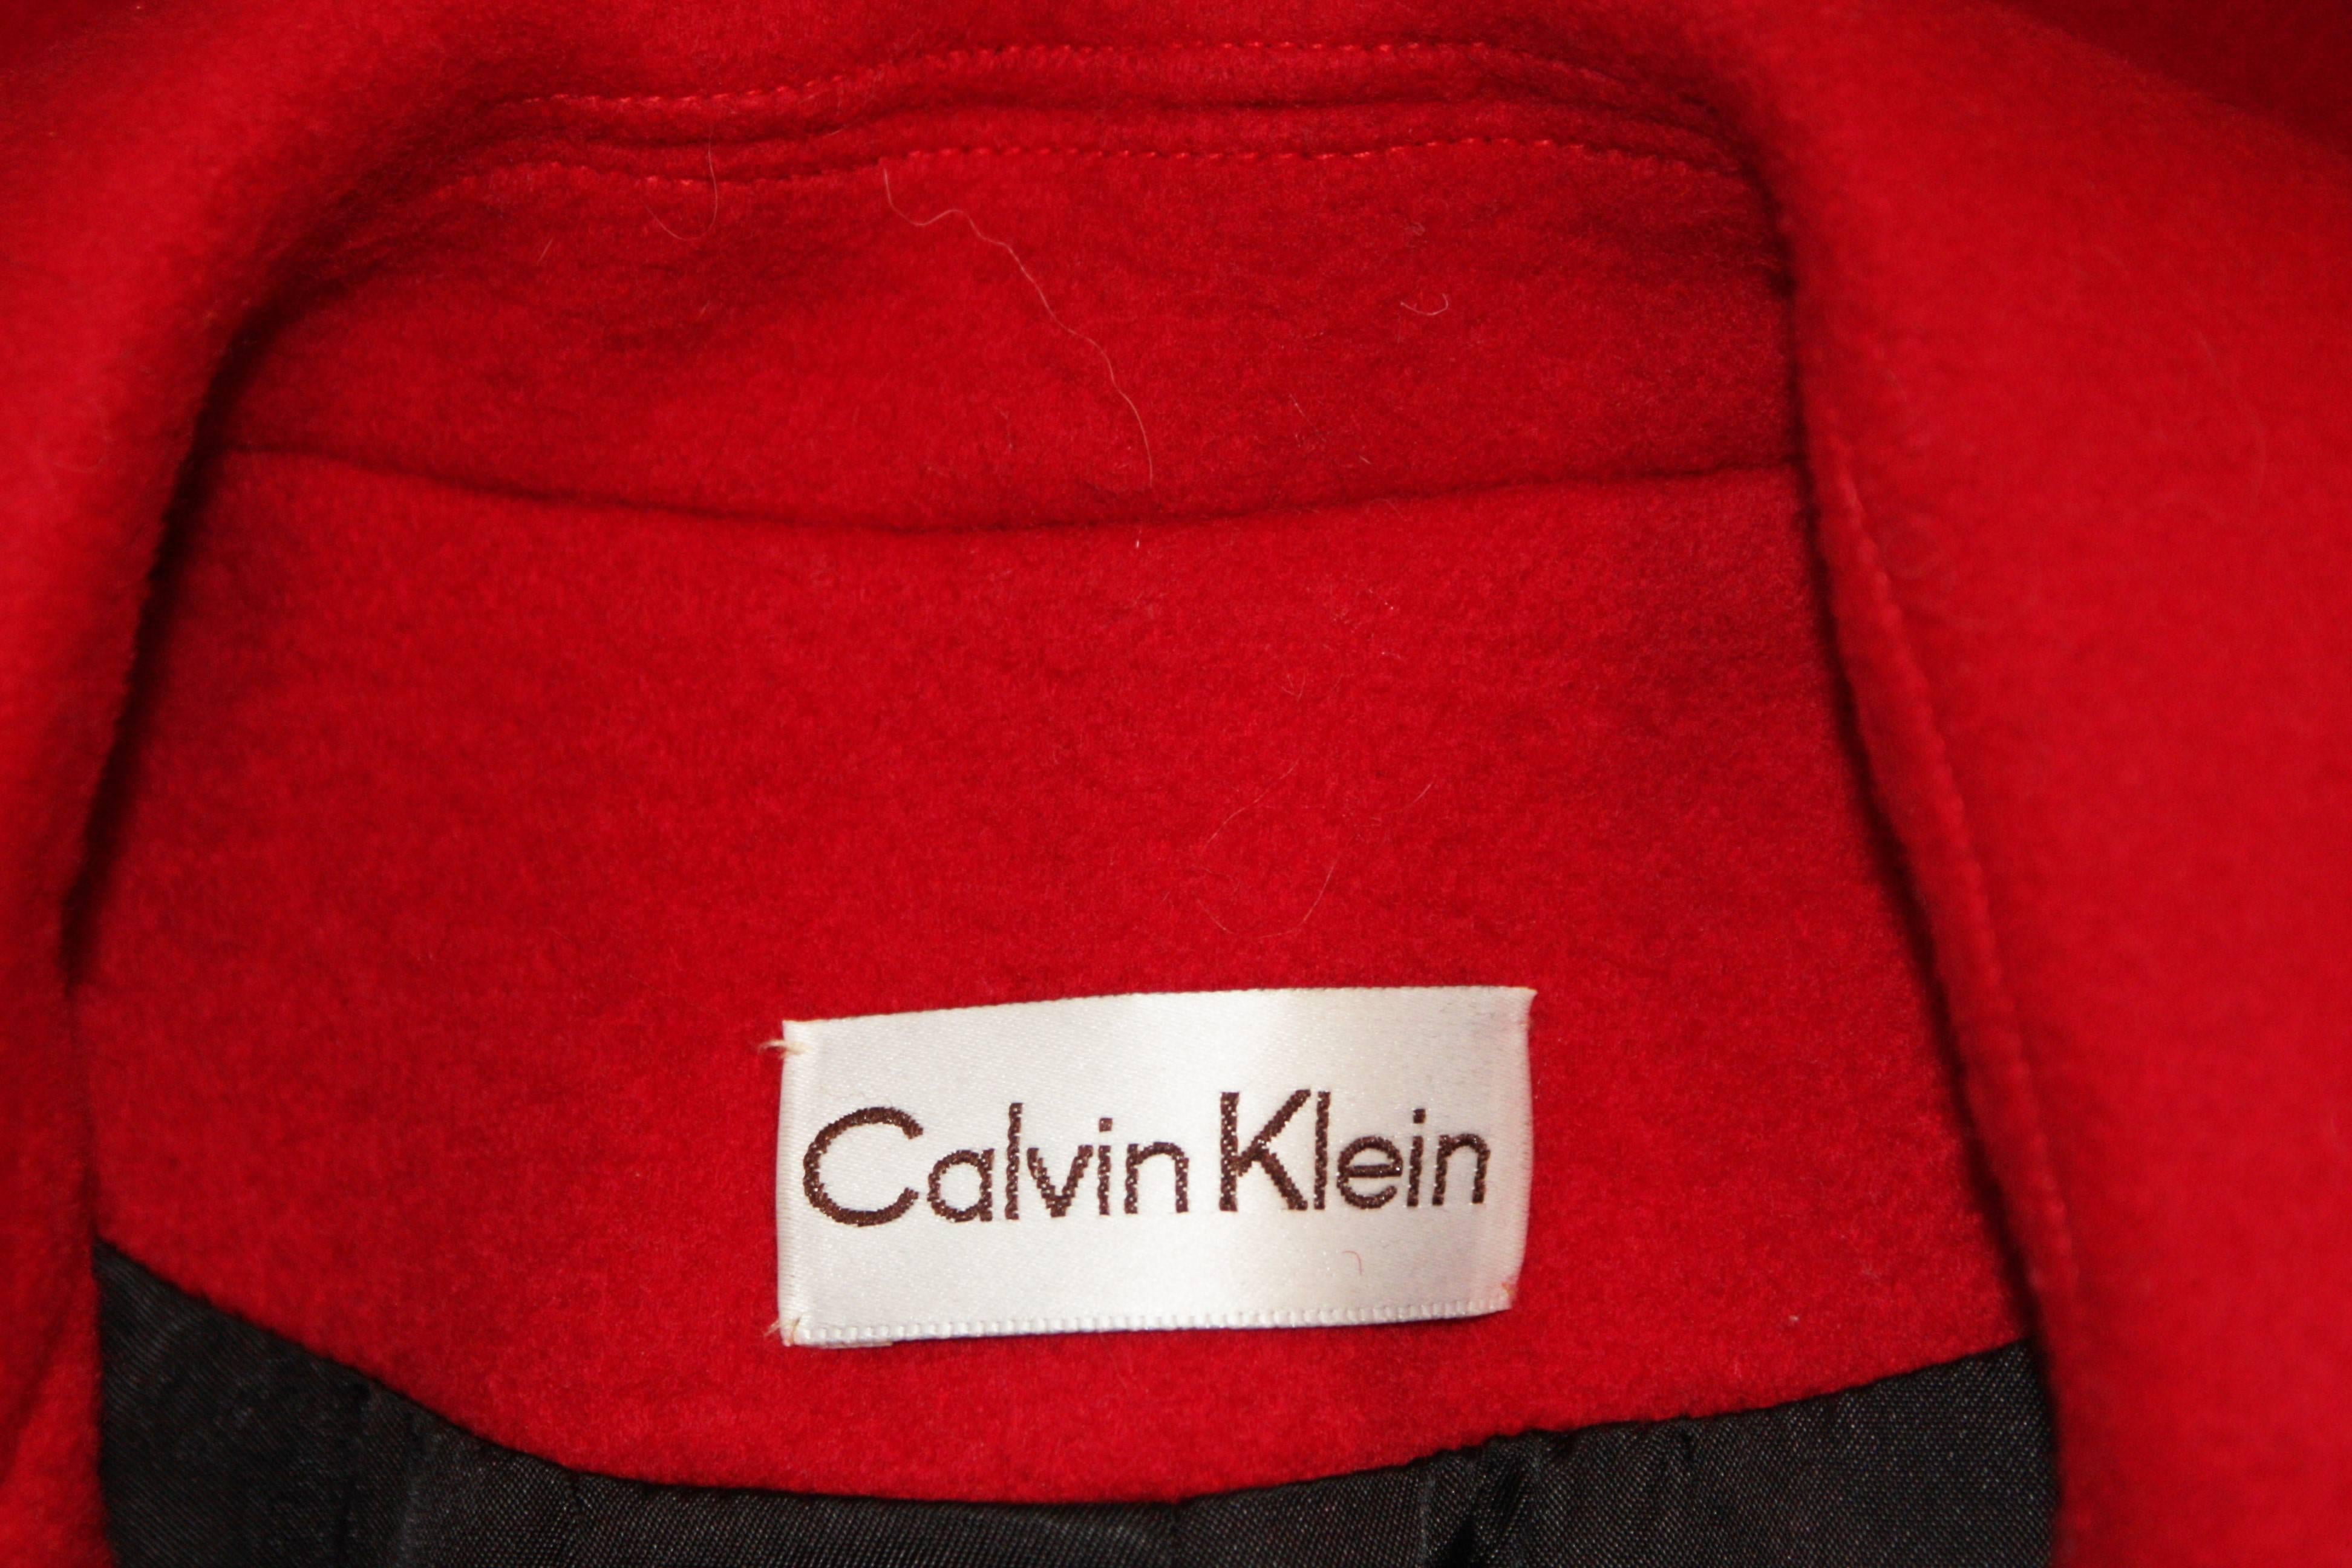 CALVIN KLEIN Circa 1980's Red Wool Peacoat Size 8-10 5